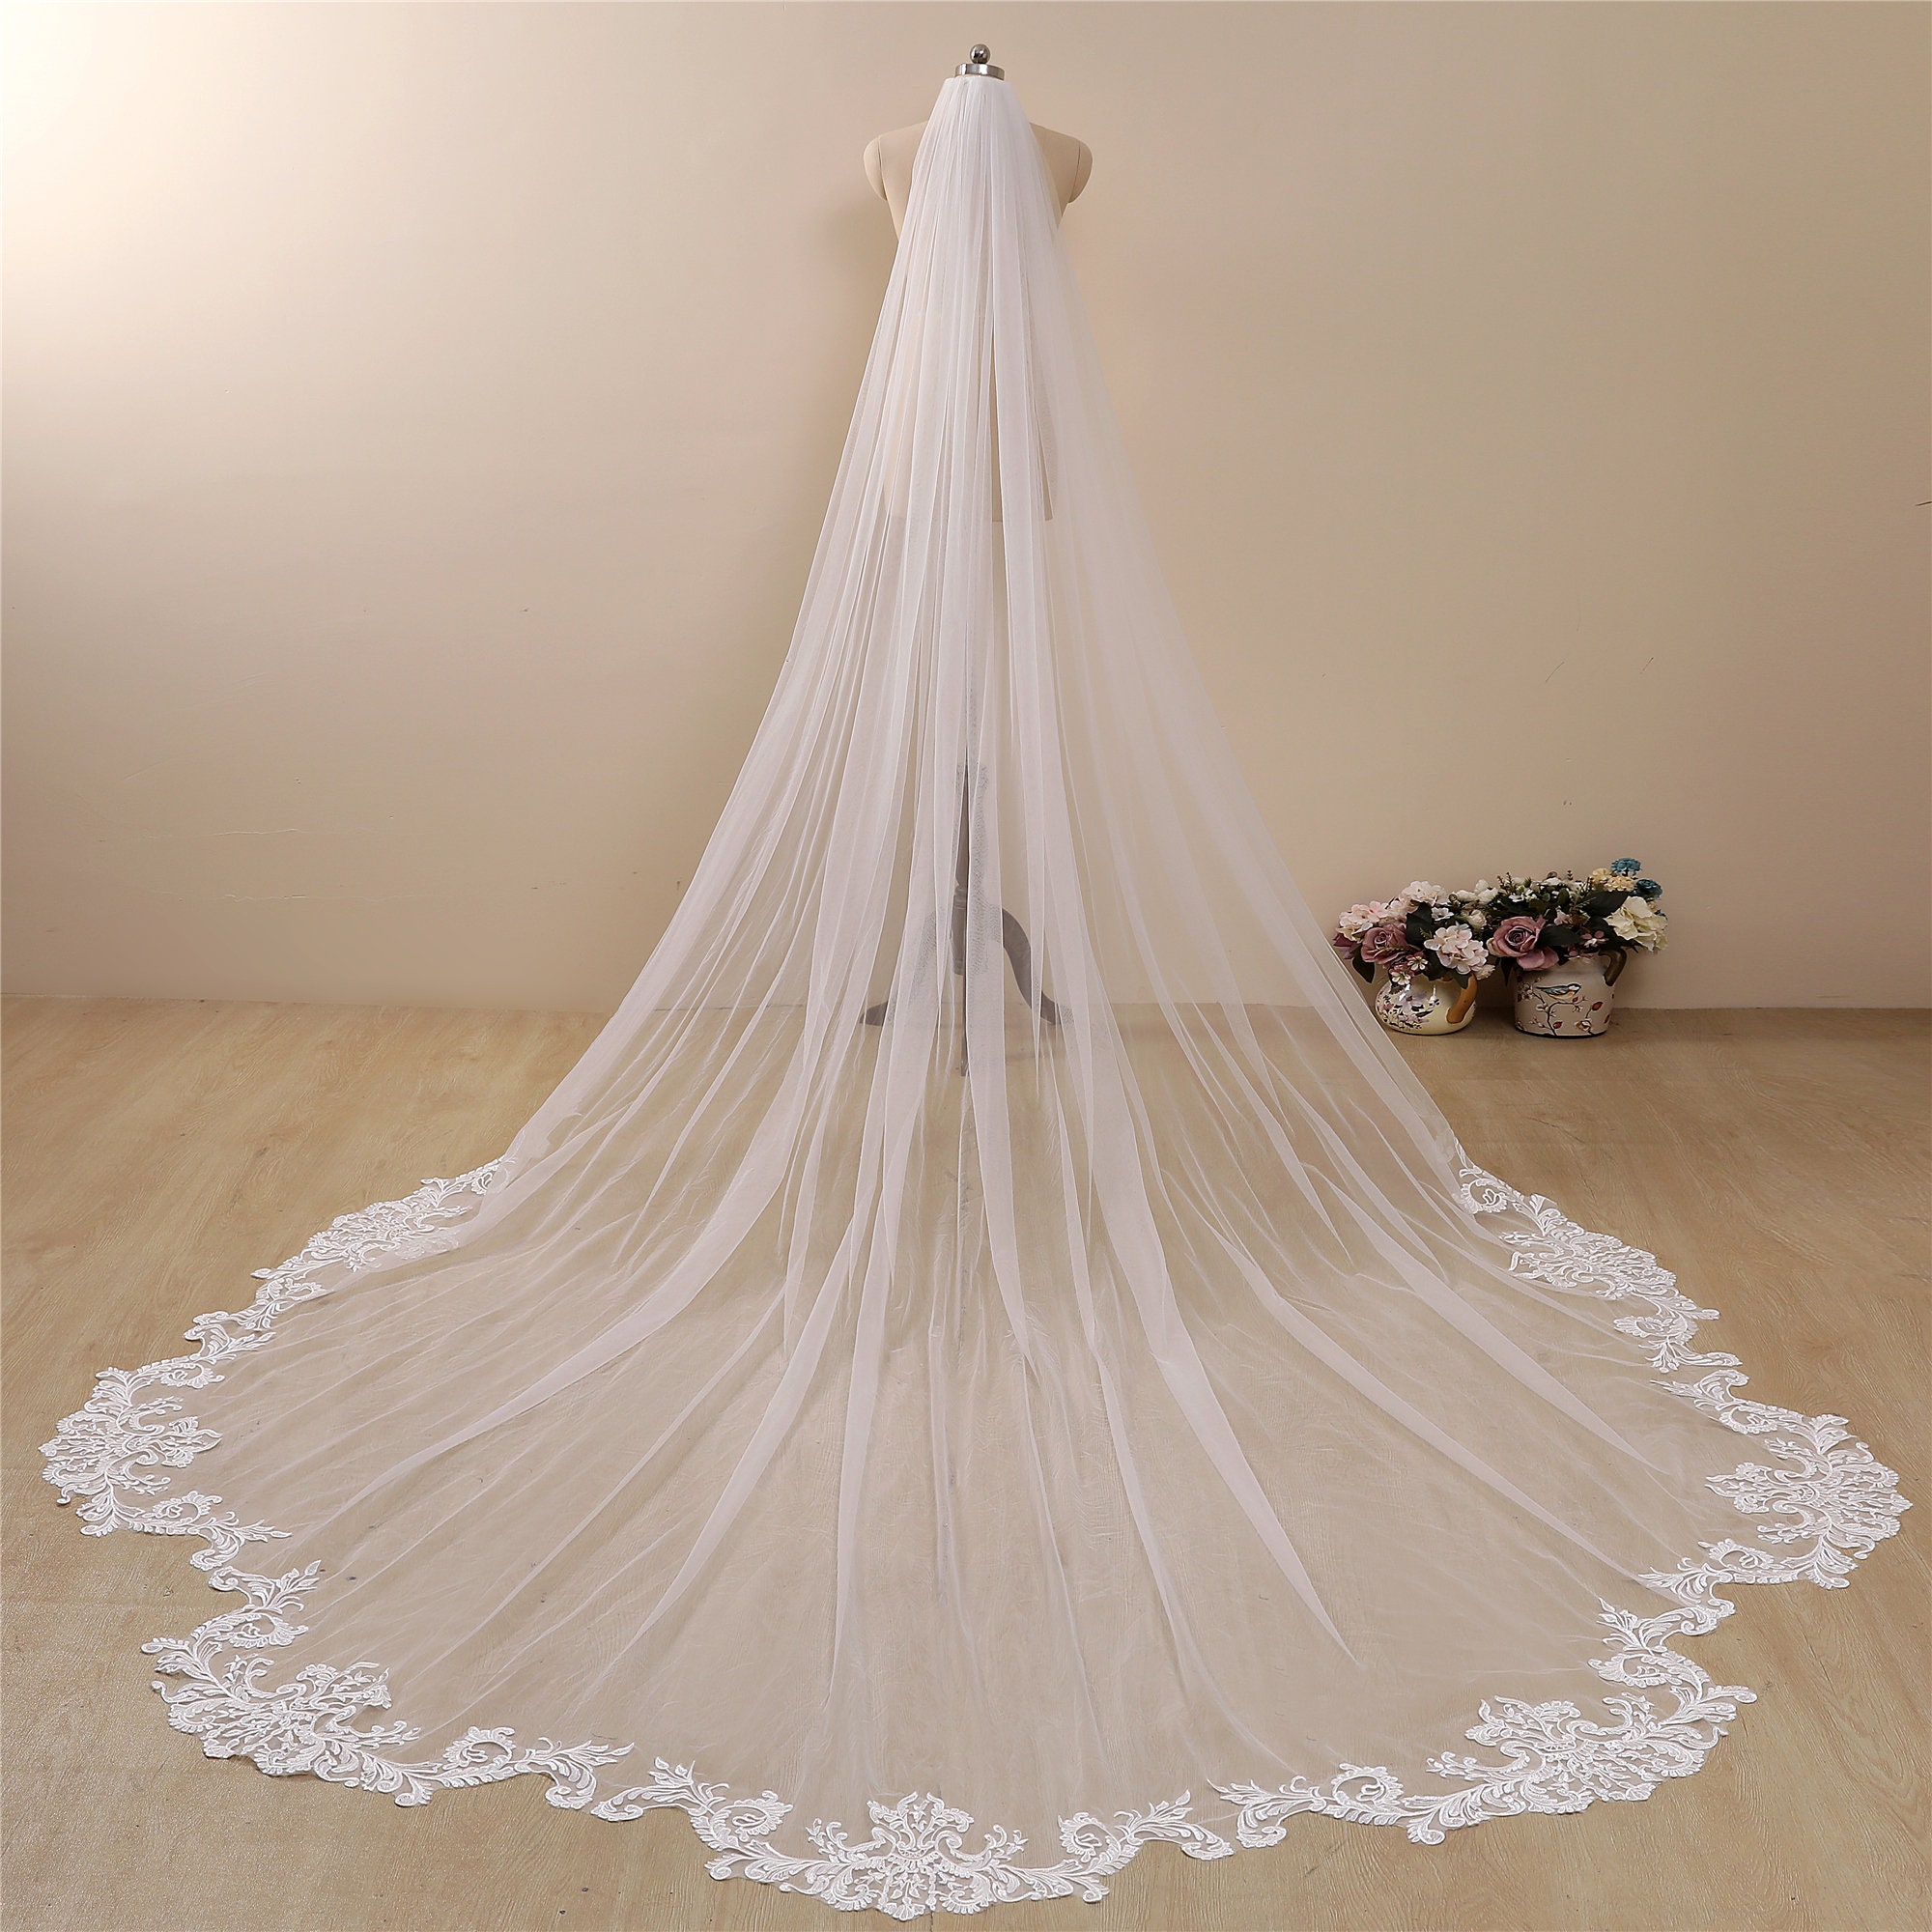 MarryBridalUS Vintage Wedding Veil,Cathedral Veil with Comb,Long Bridal Veil Soft Tulle Veil Ivory Chapel Length Veil,special Cut veil,costume veil,bridal